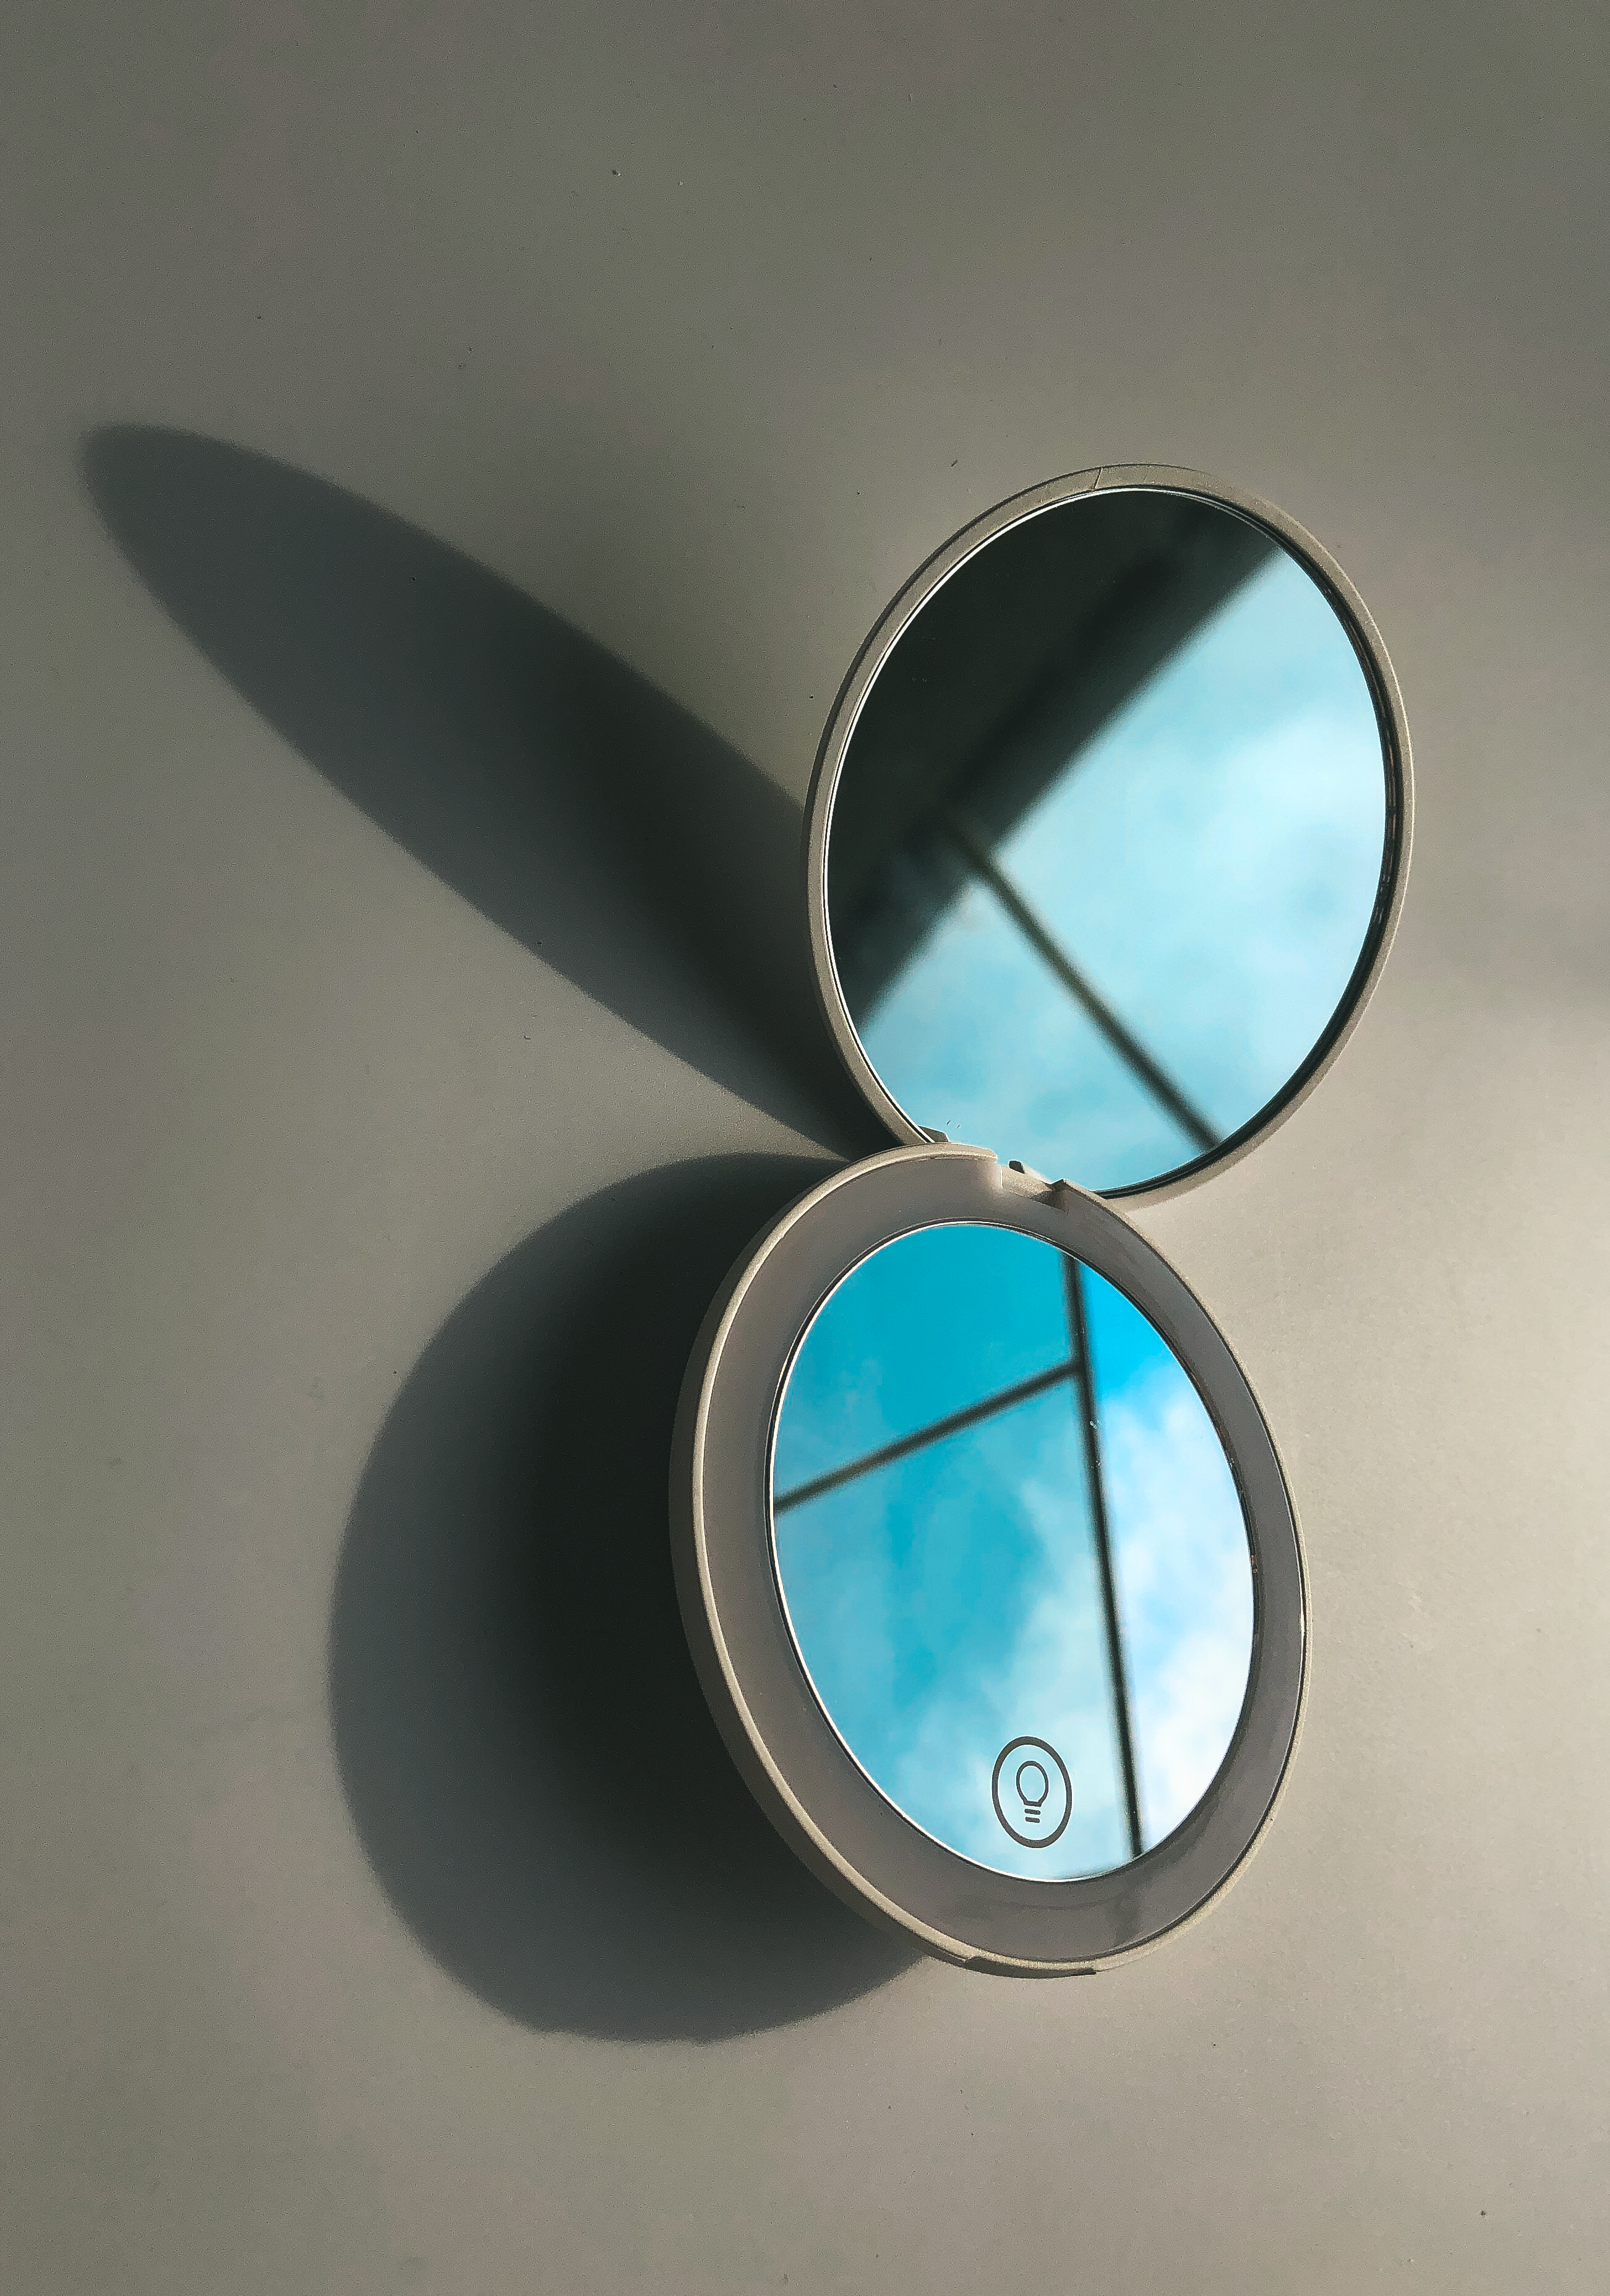 LED Pocket Mirror by Veronique